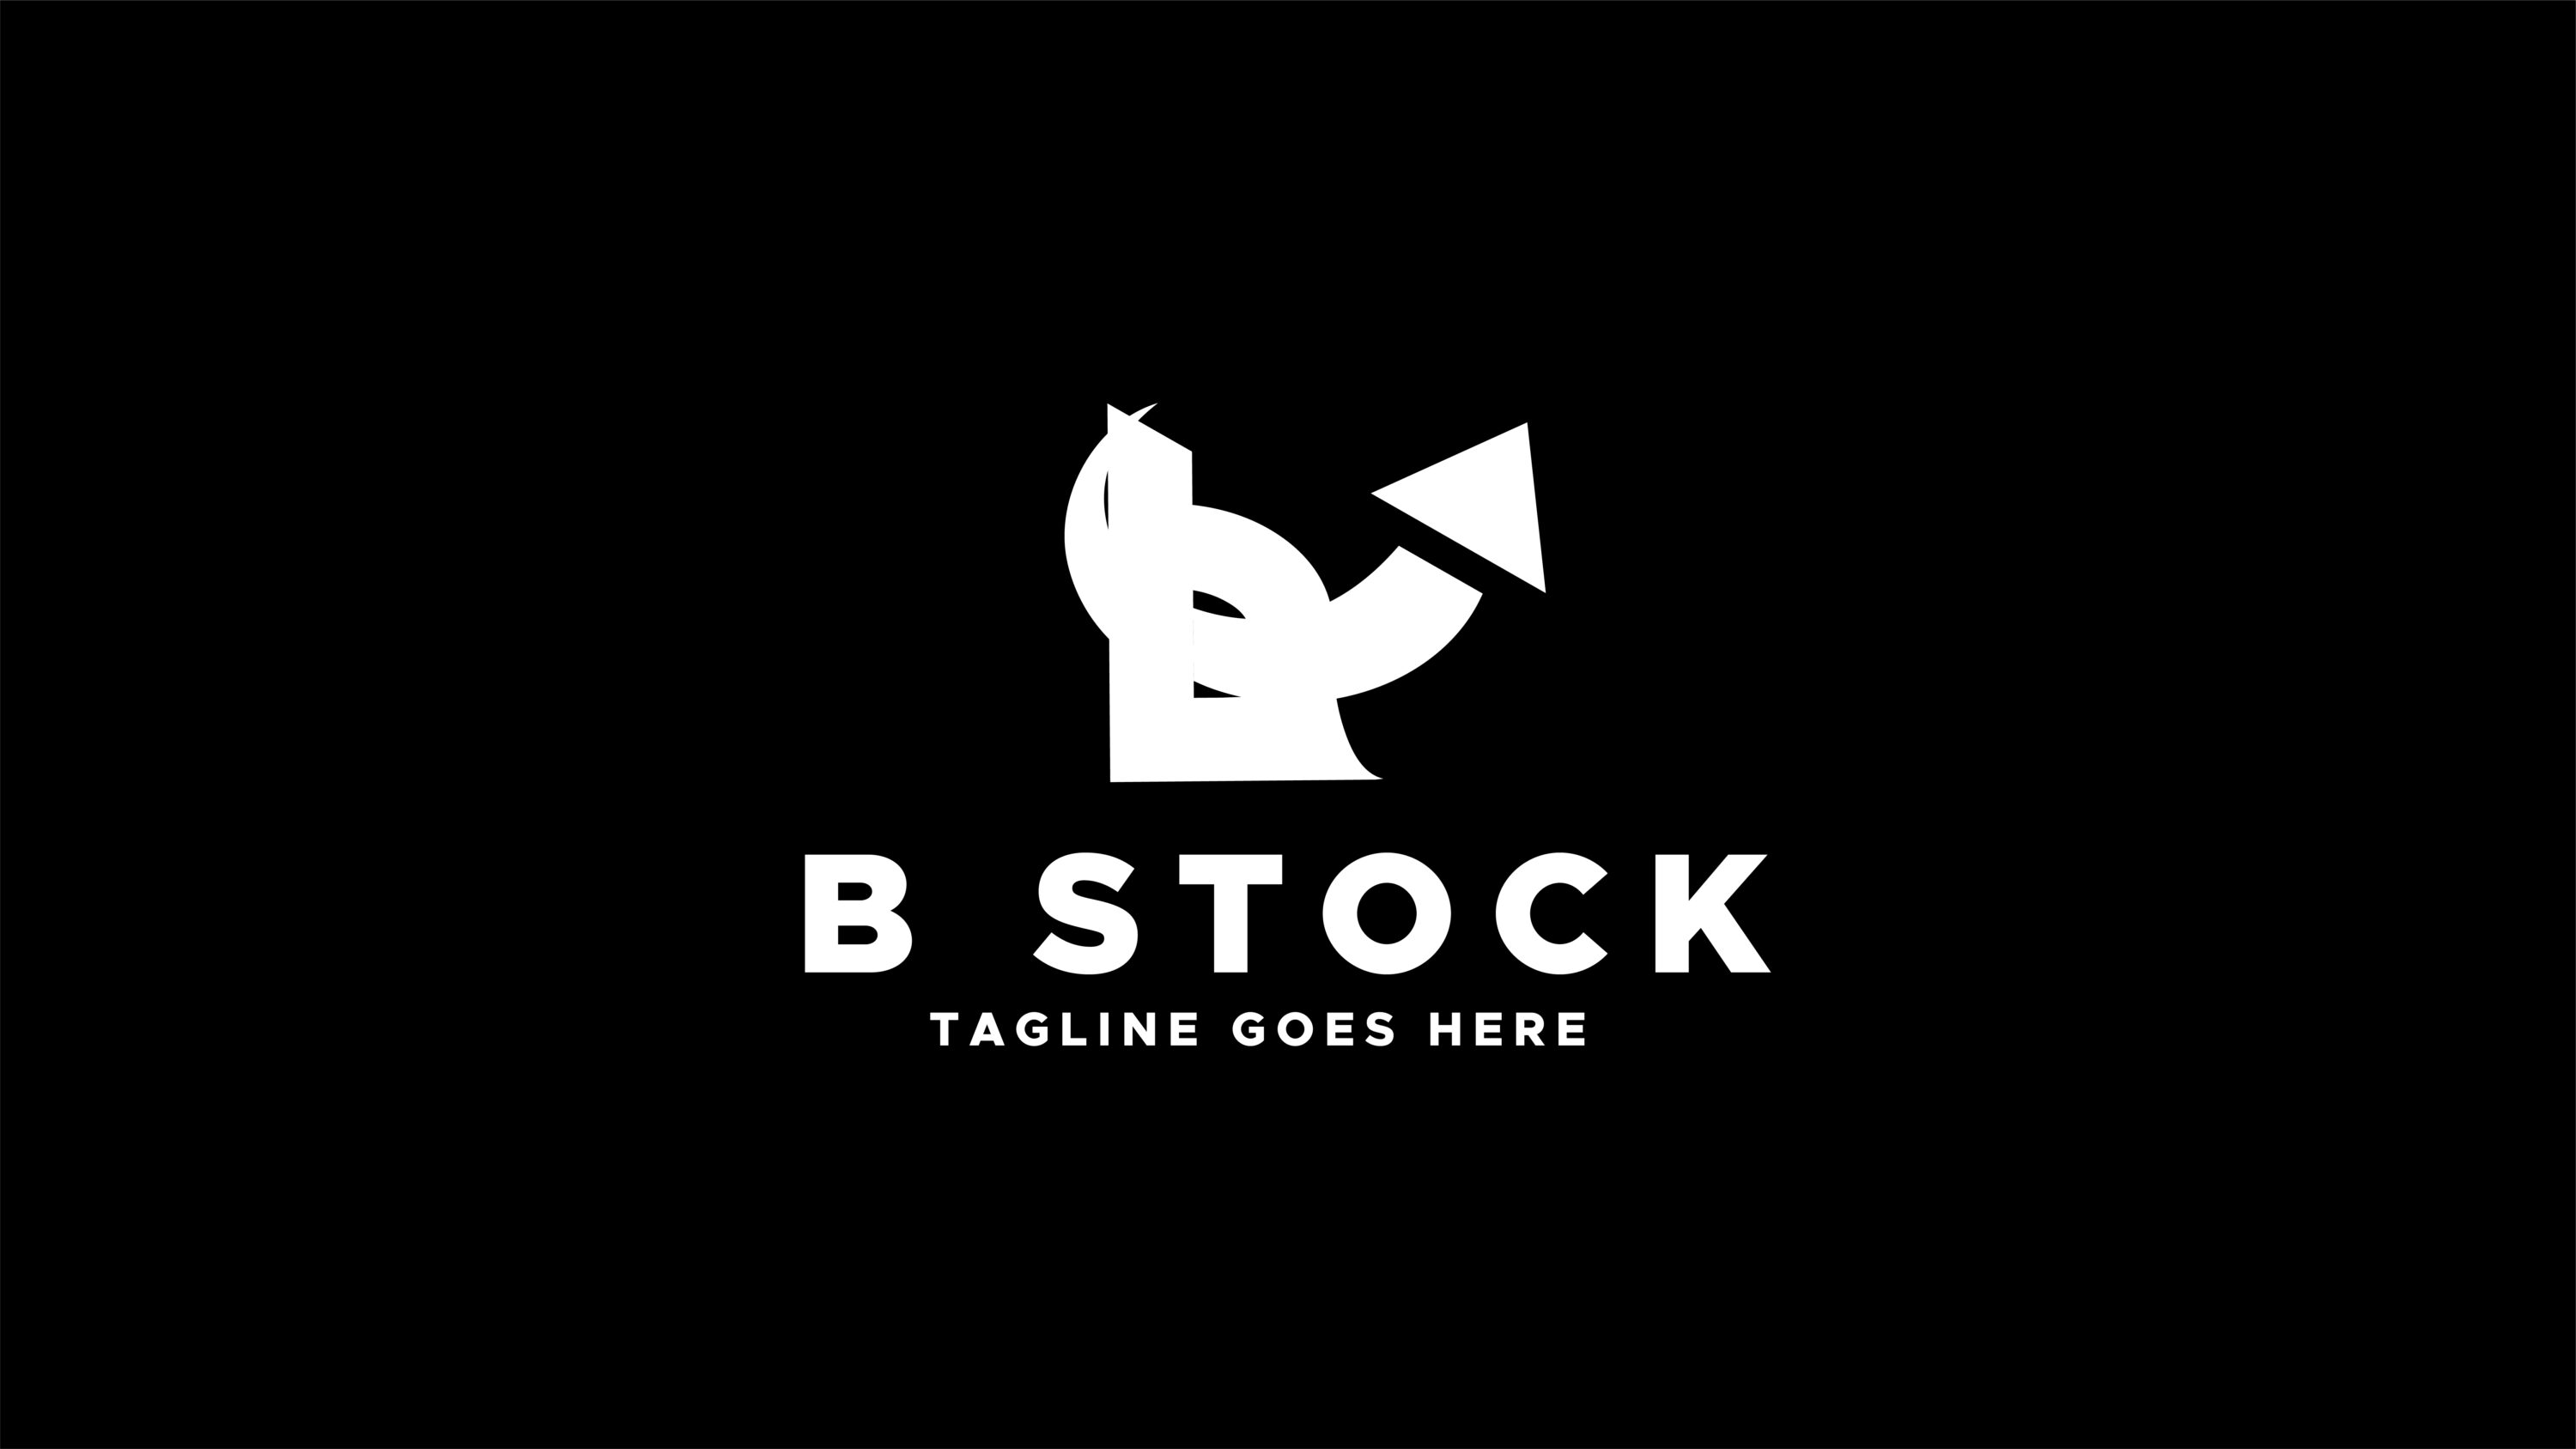 B Letter Logo - B Stock Professional Logo Design Only 10$, white letter with white arrow on black background logo.